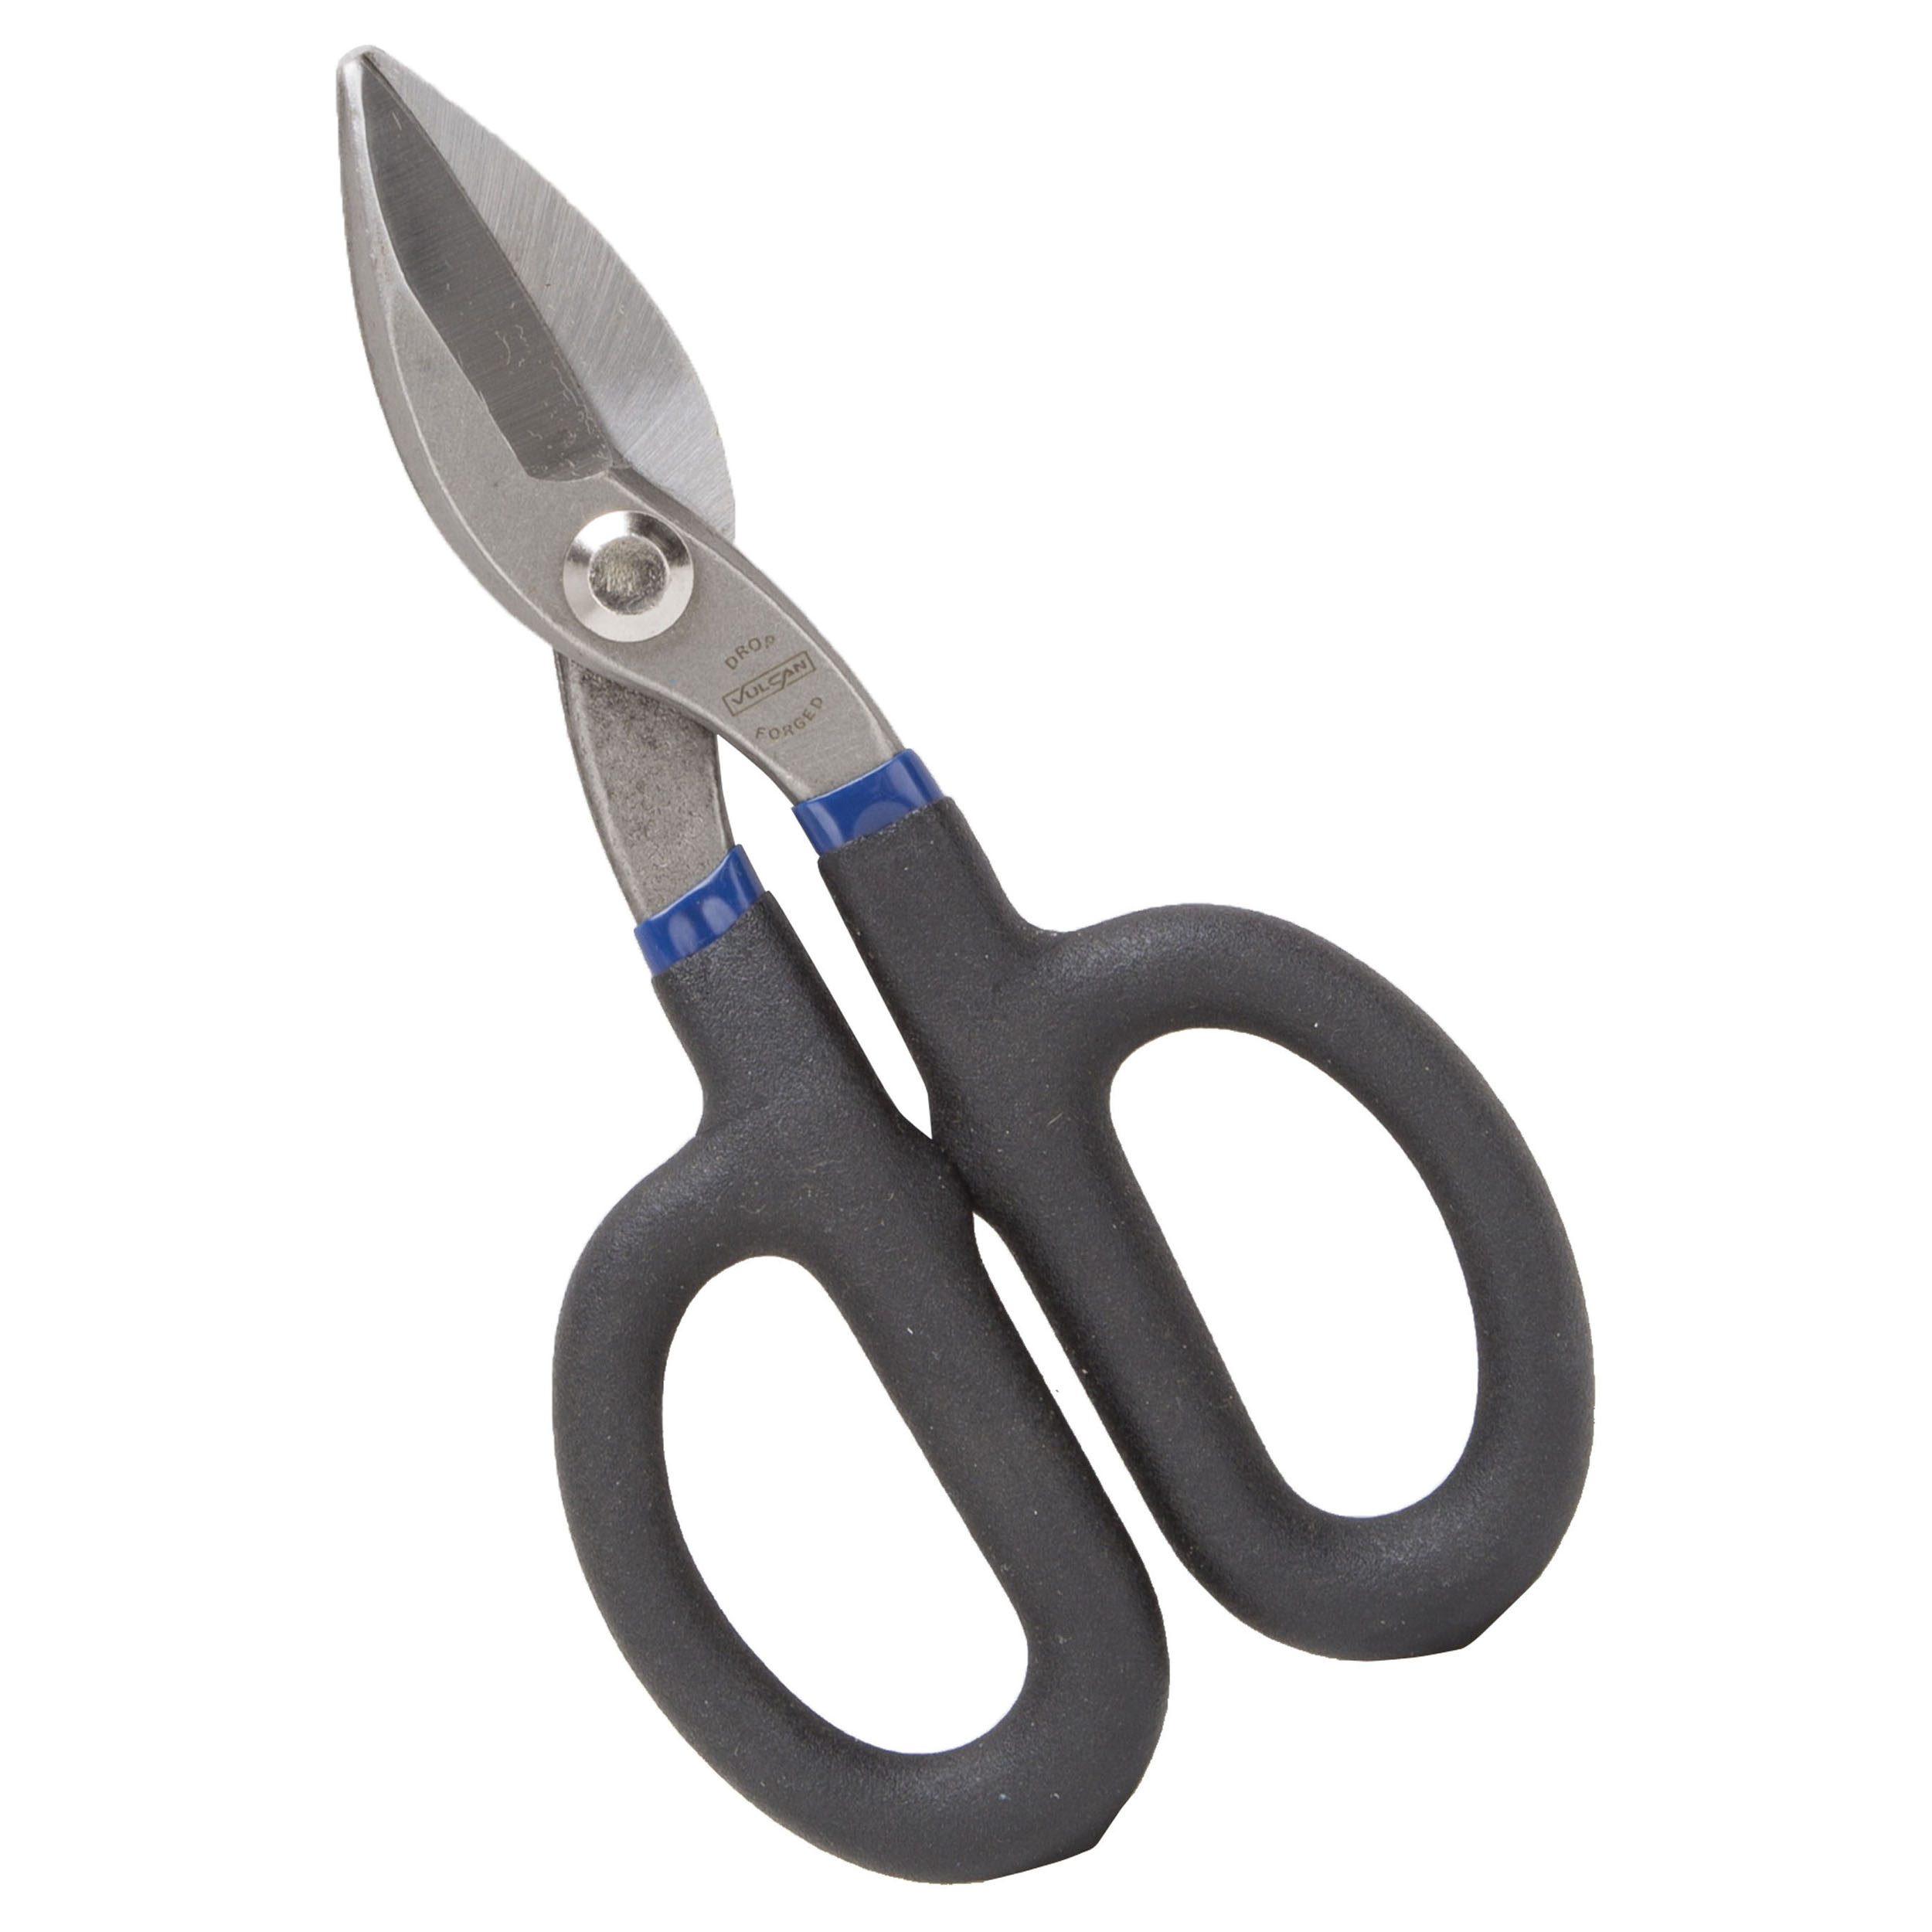 TS-01407 Snip, 7 in OAL, 2 in L Cut, Straight Cut, Carbon Steel Blade, Non-Slip Grip Handle, Black/Blue Handle